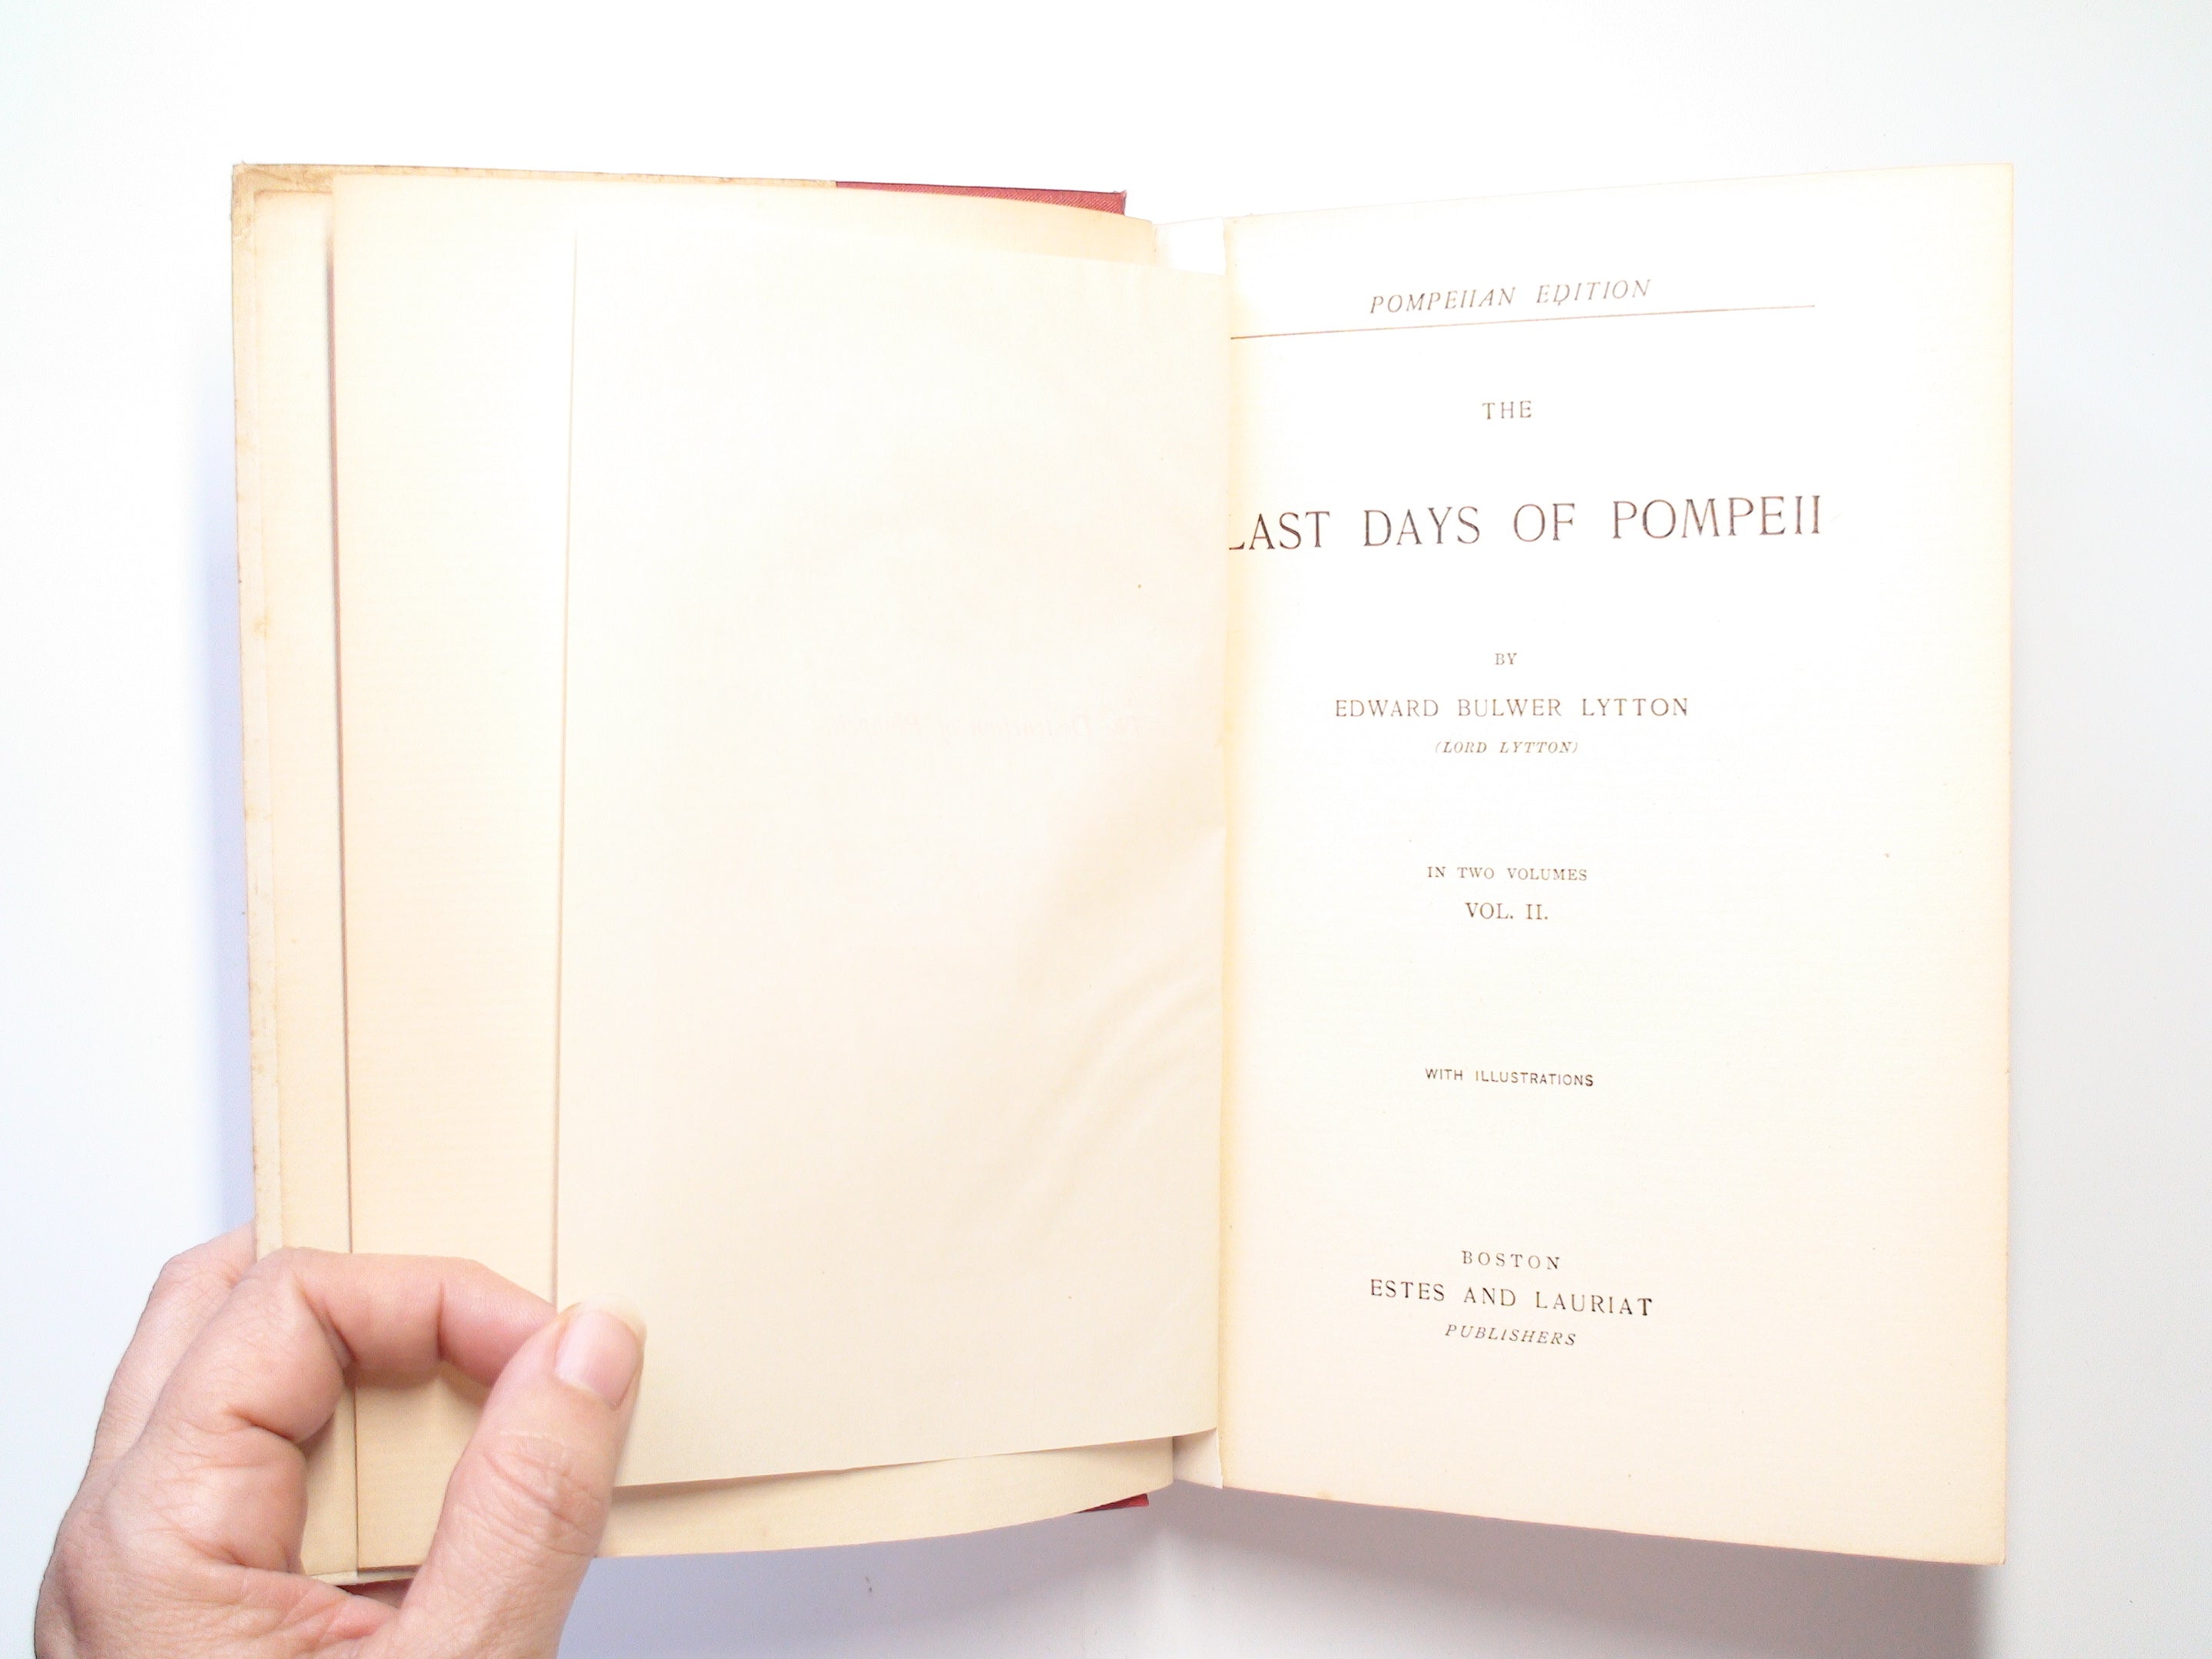 The Last Days of Pompeii, Edward Bulwer Lytton, VOL II, Pompeiian Edition, 1891